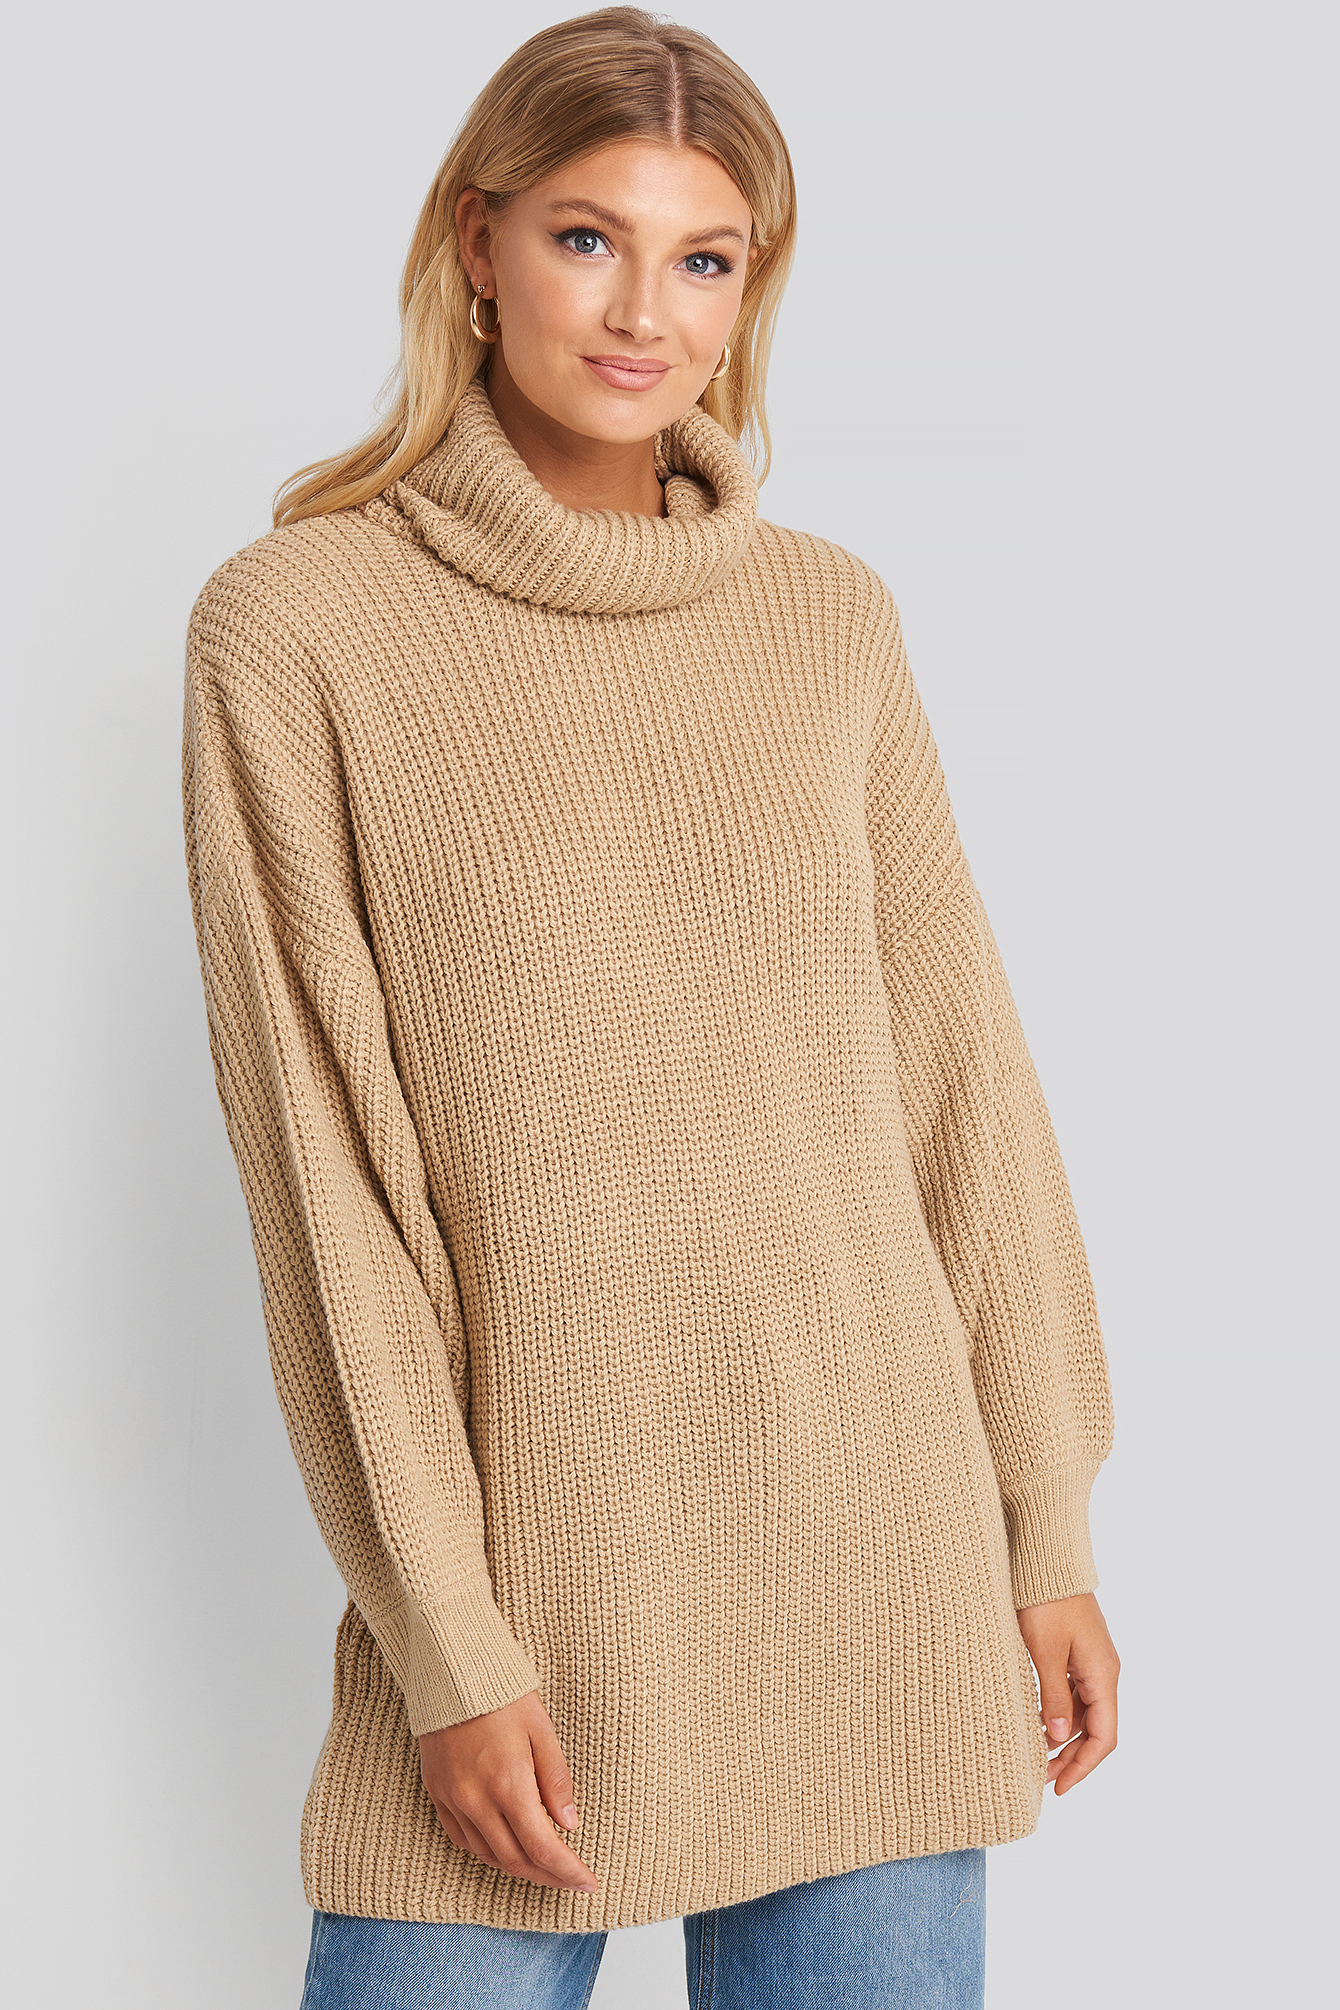 Light Beige Oversized High Neck Long Knitted sweater